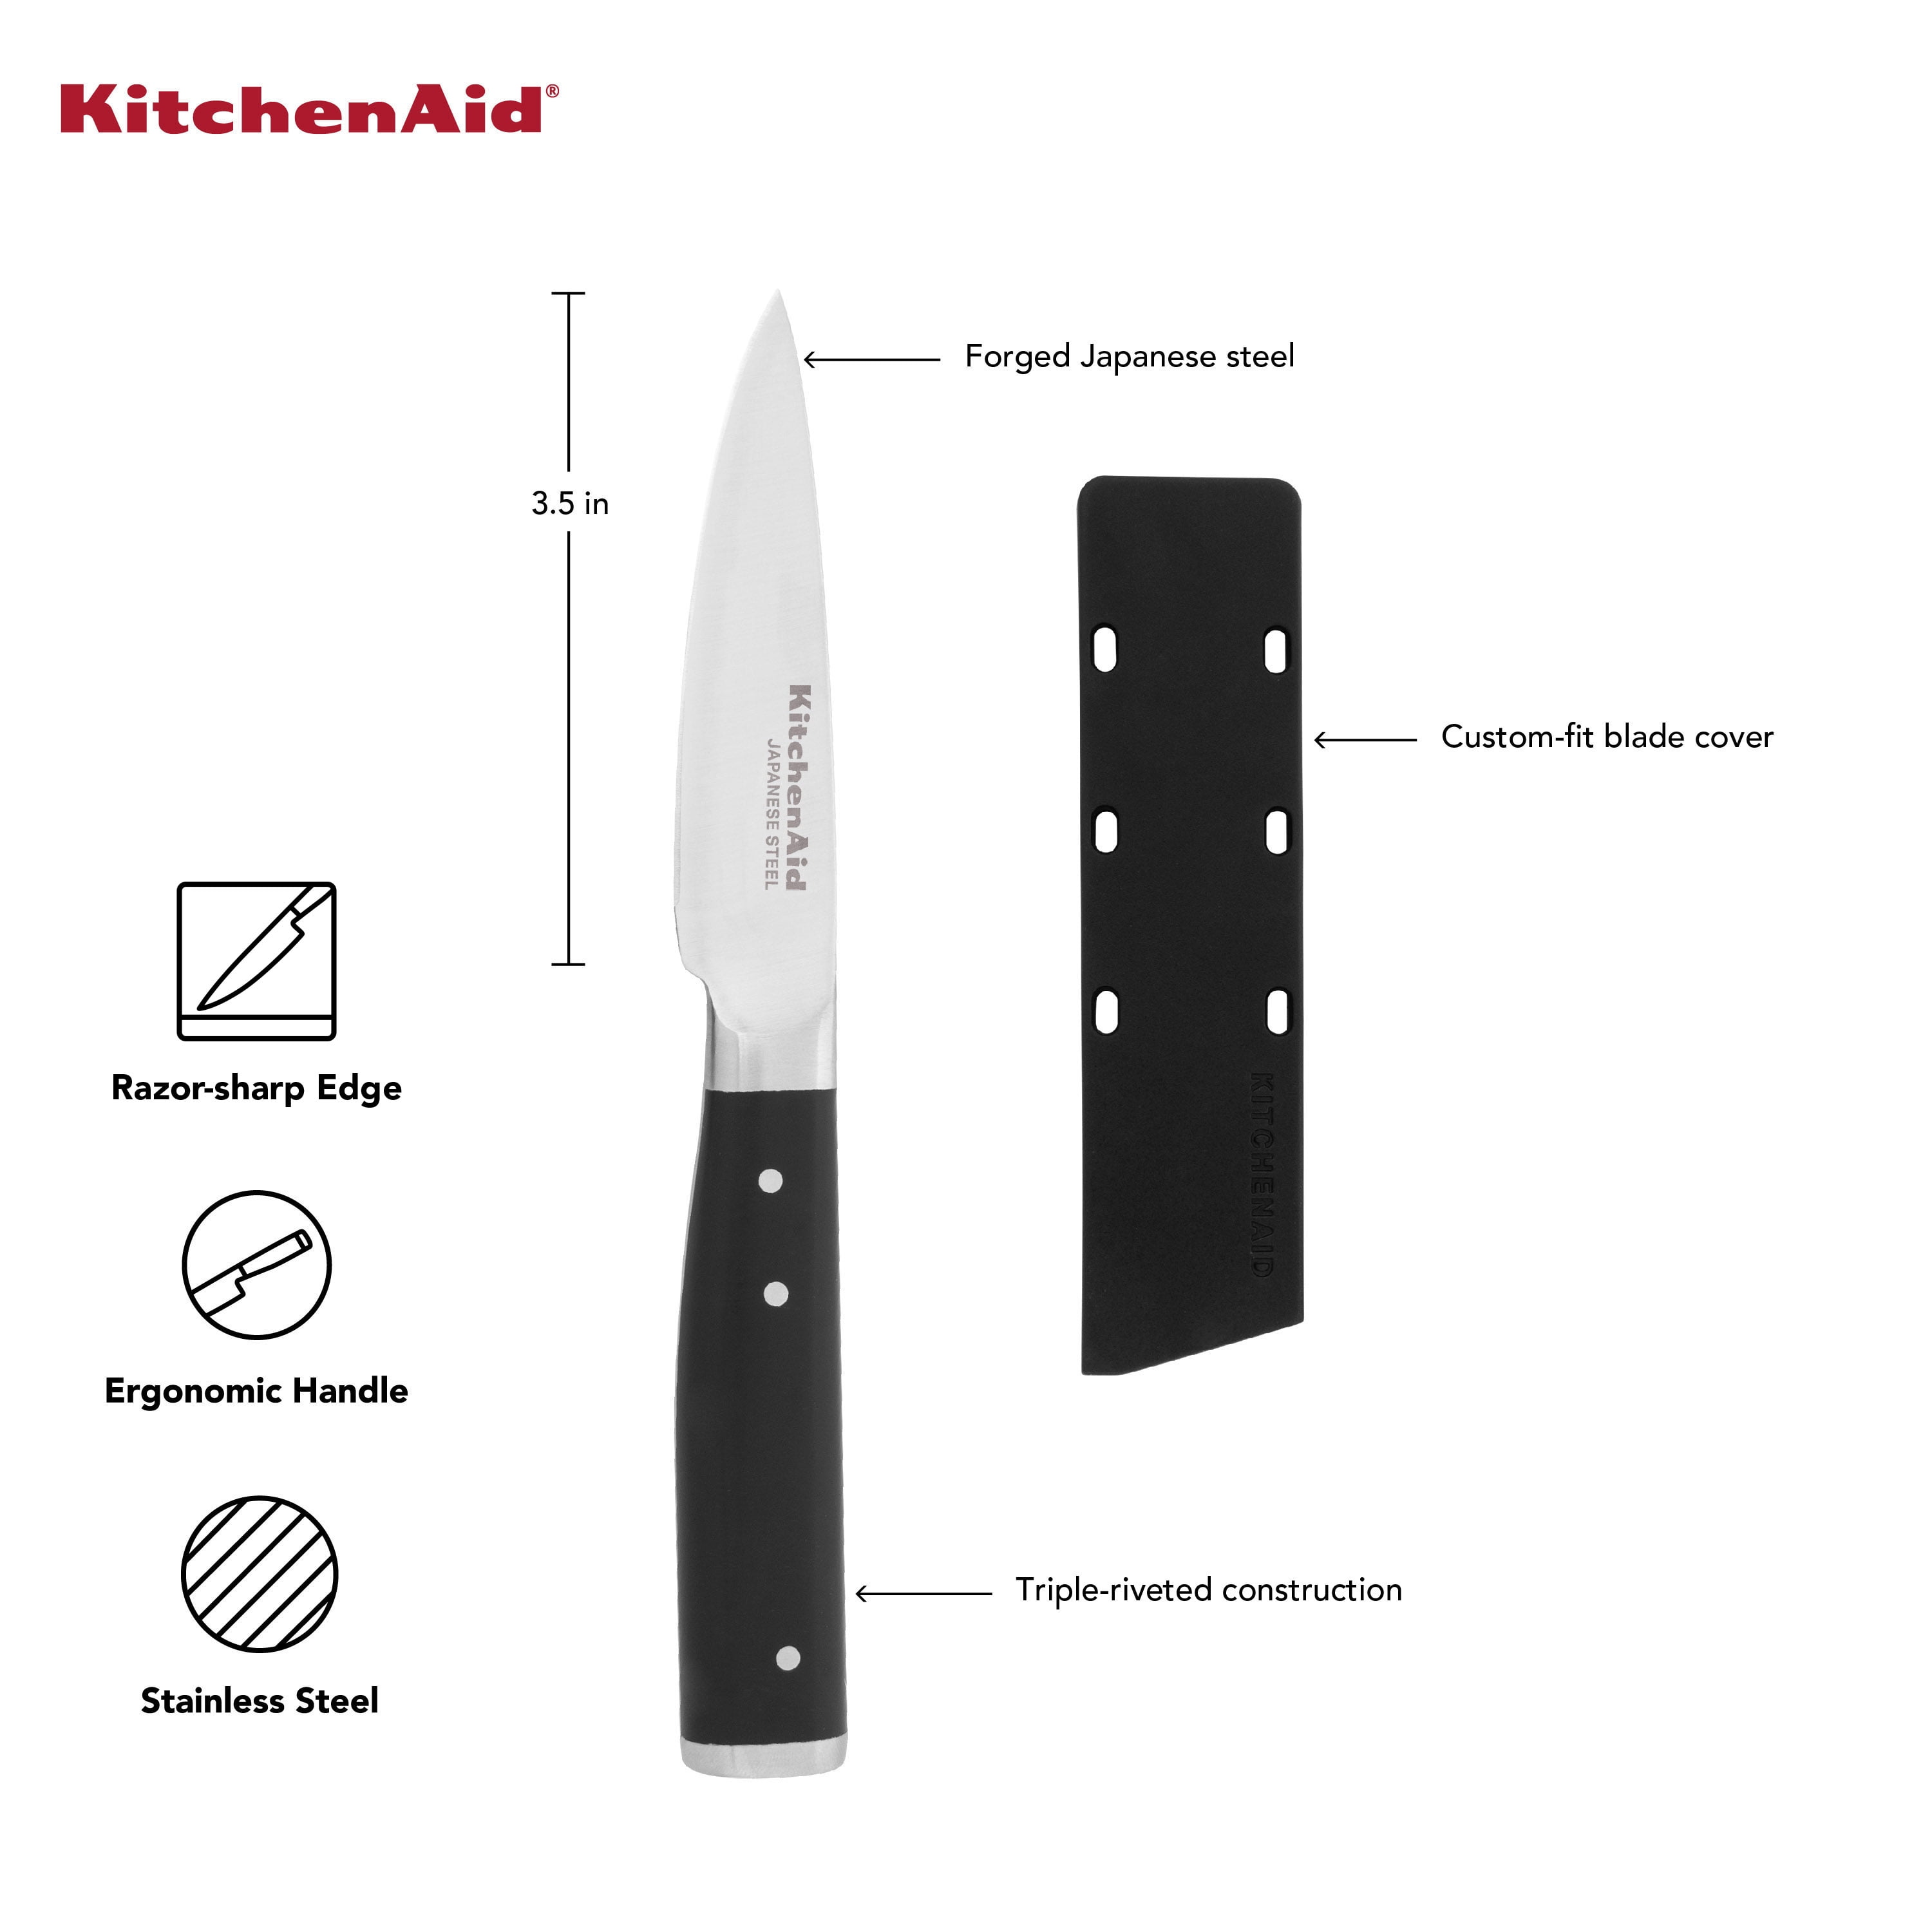 KitchenAid Paring Knife - 8.89 cm - Black